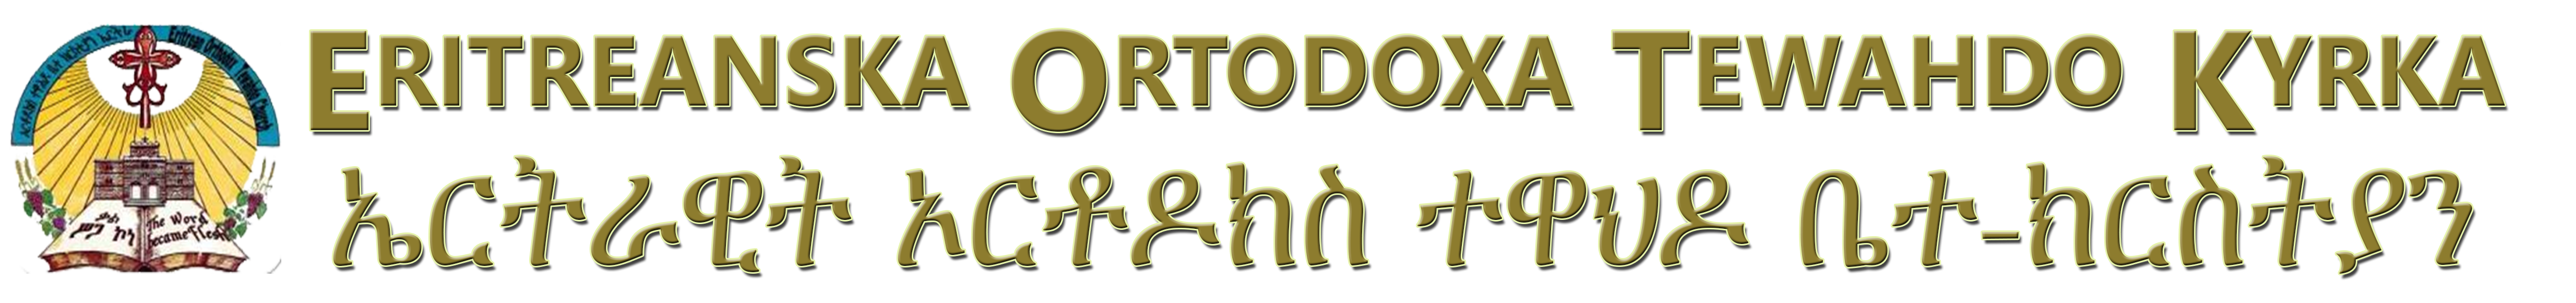 Eritreanska Ortodoxa Tewahdo Kyrka